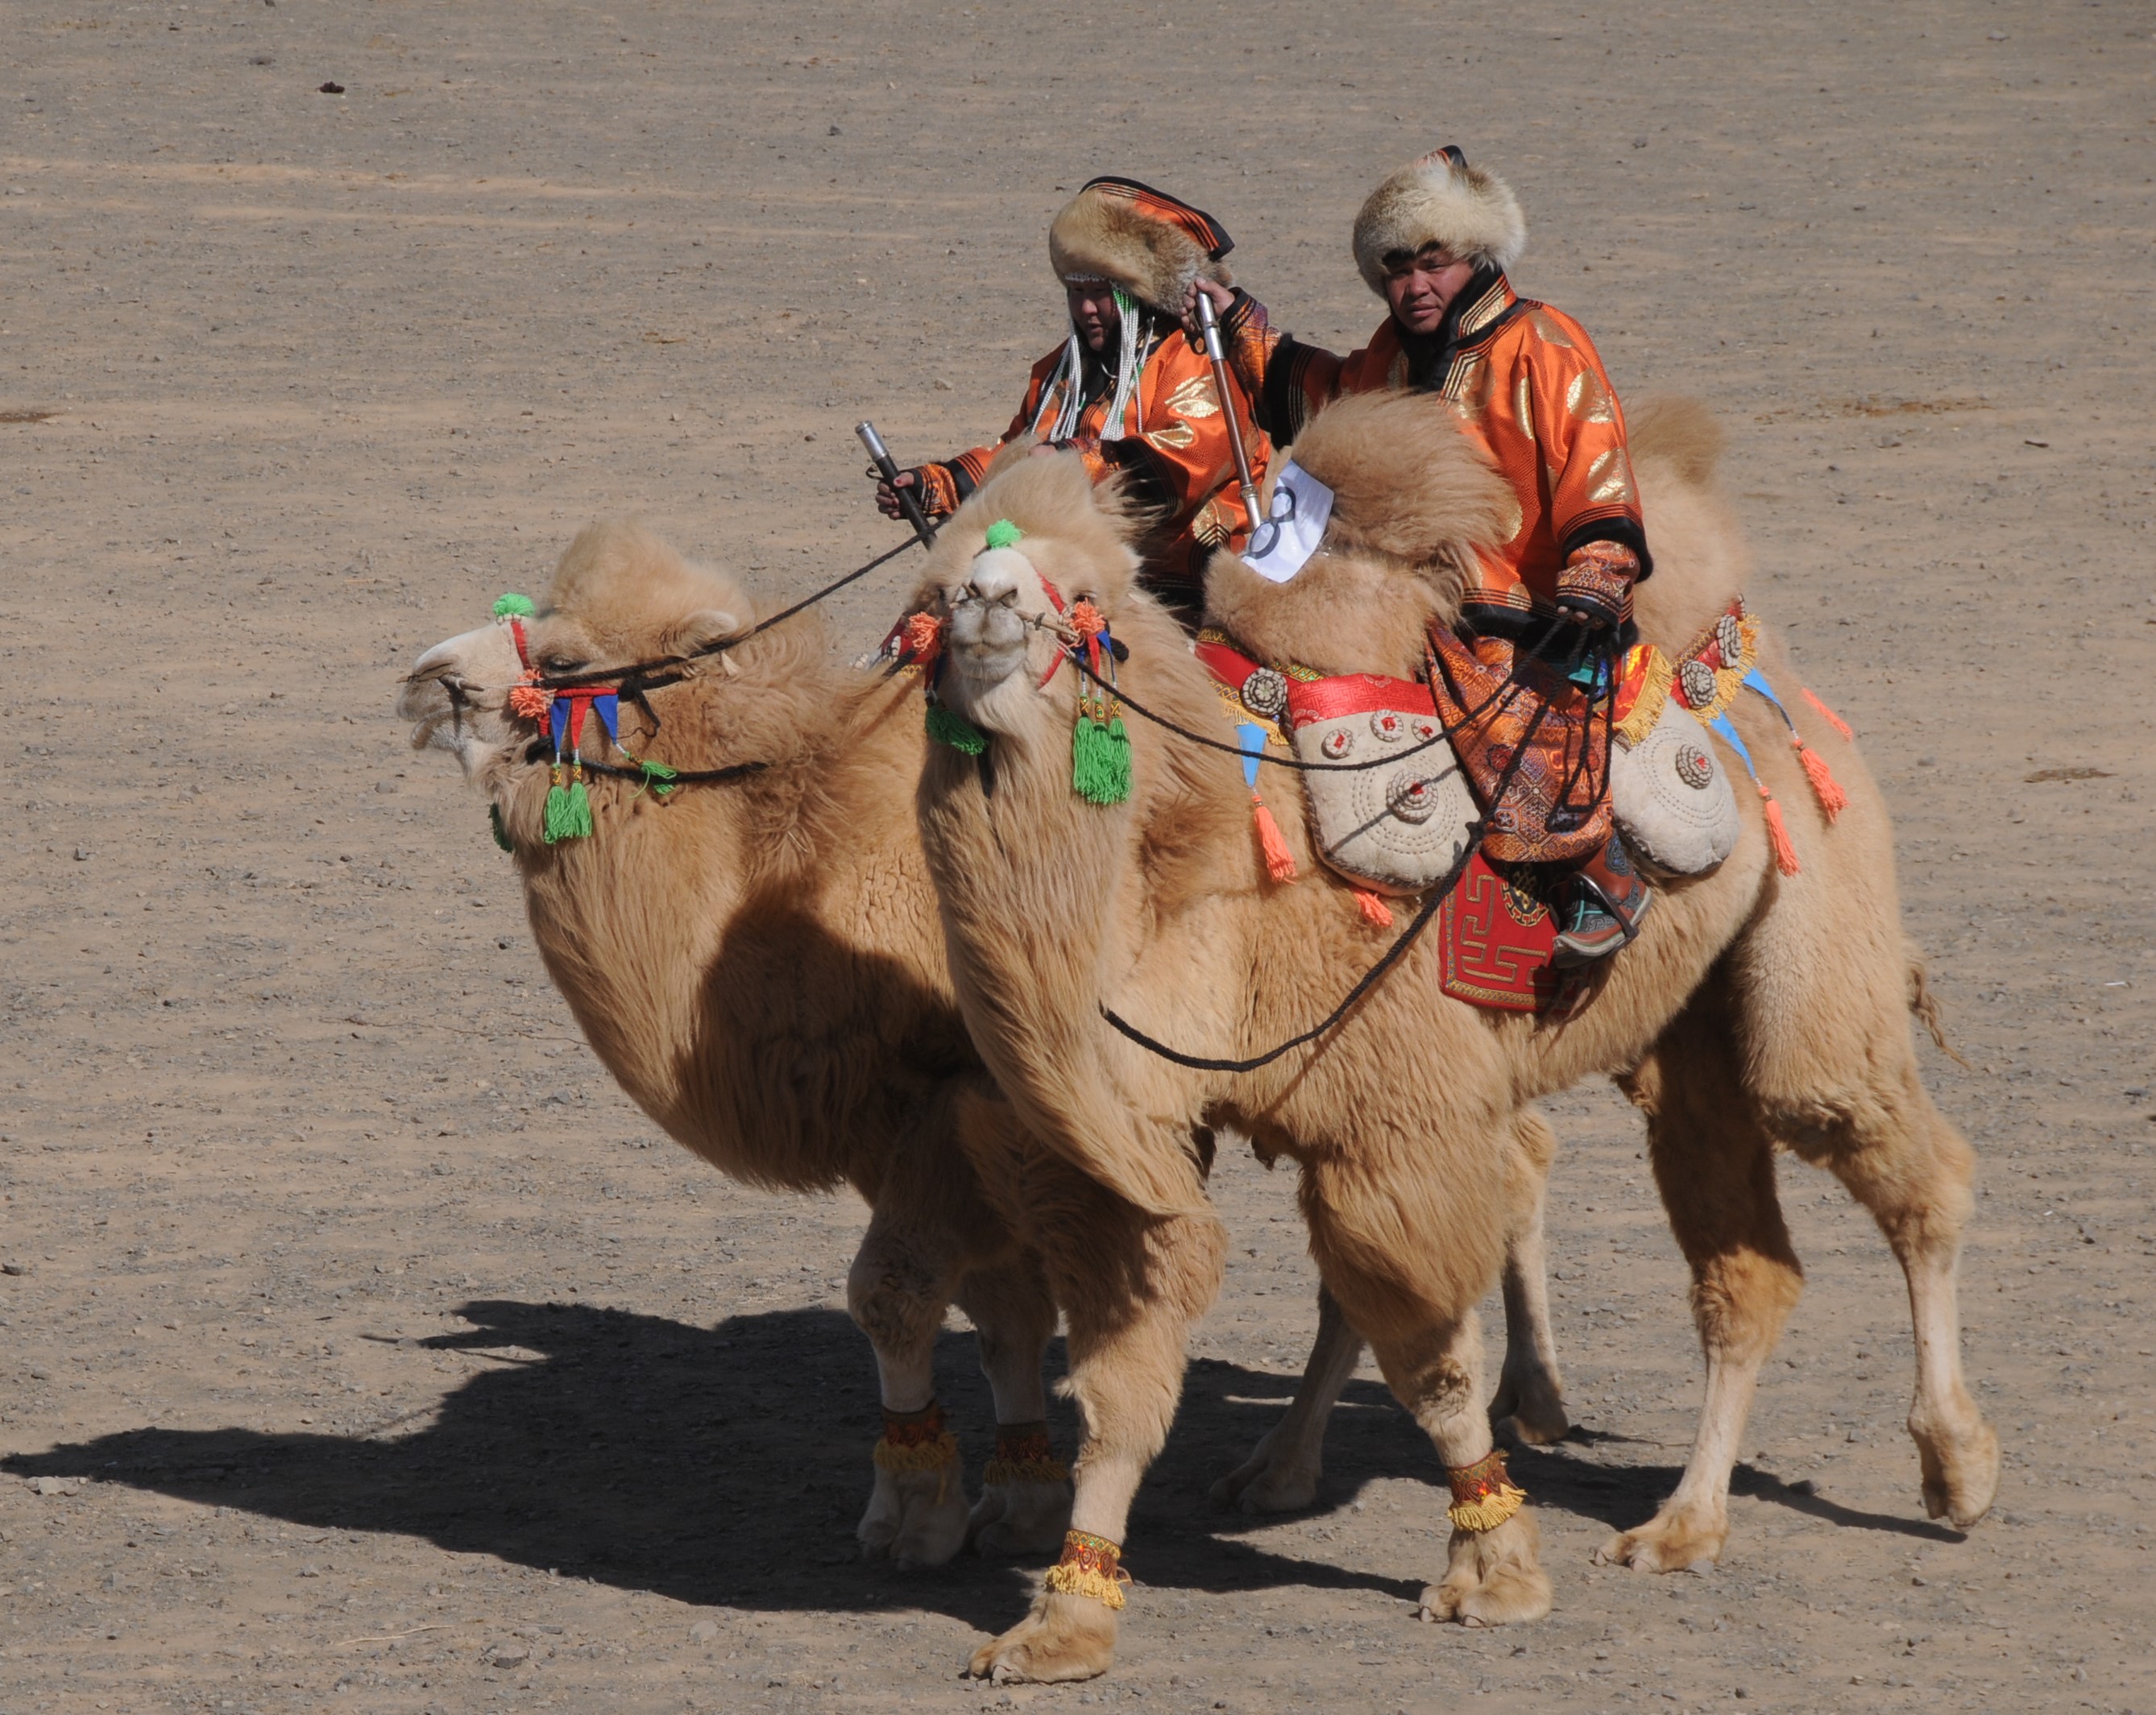 Festivals in Mongolia - Celebrations of Nomadic Traditions, Camel Festival South Gobi